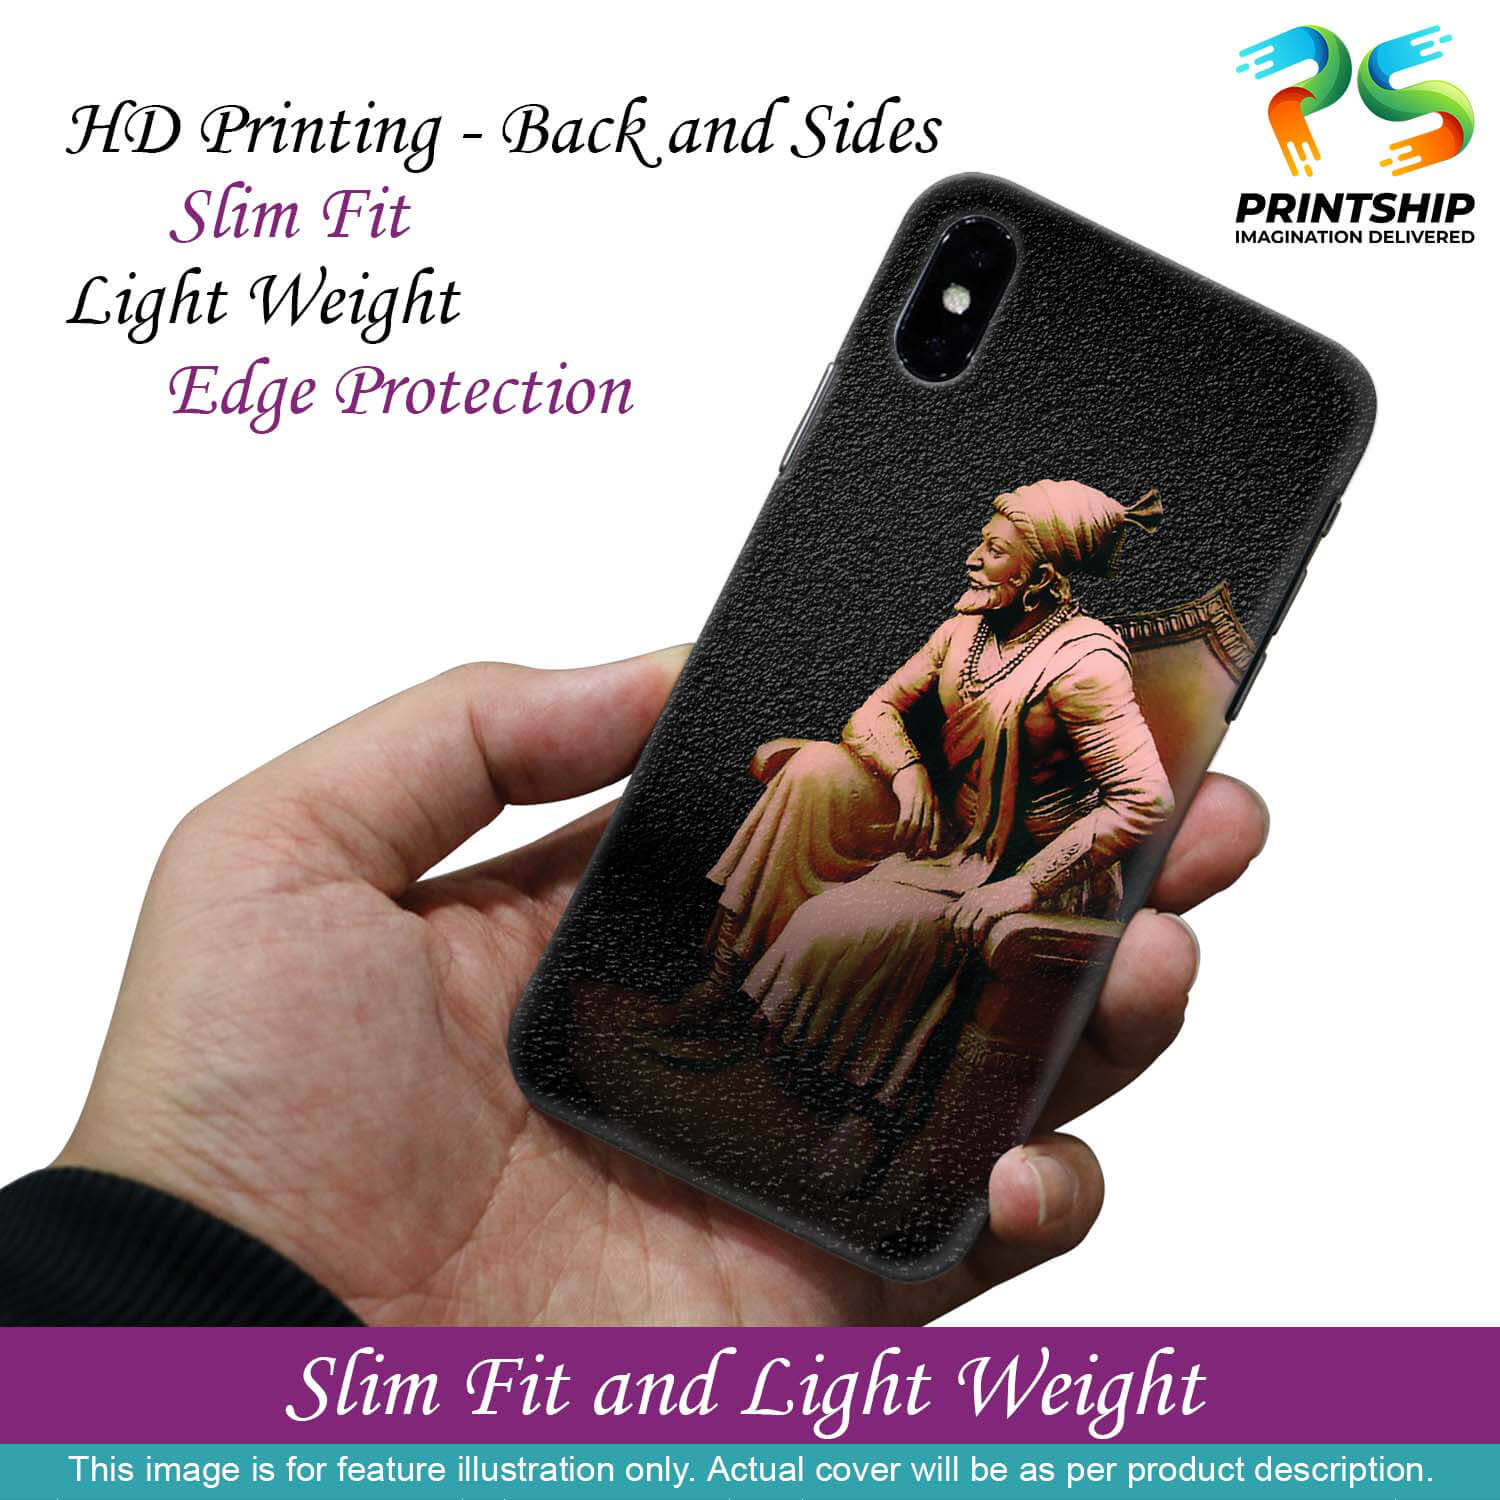 W0043-Shivaji Photo Back Cover for Samsung Galaxy Note 9